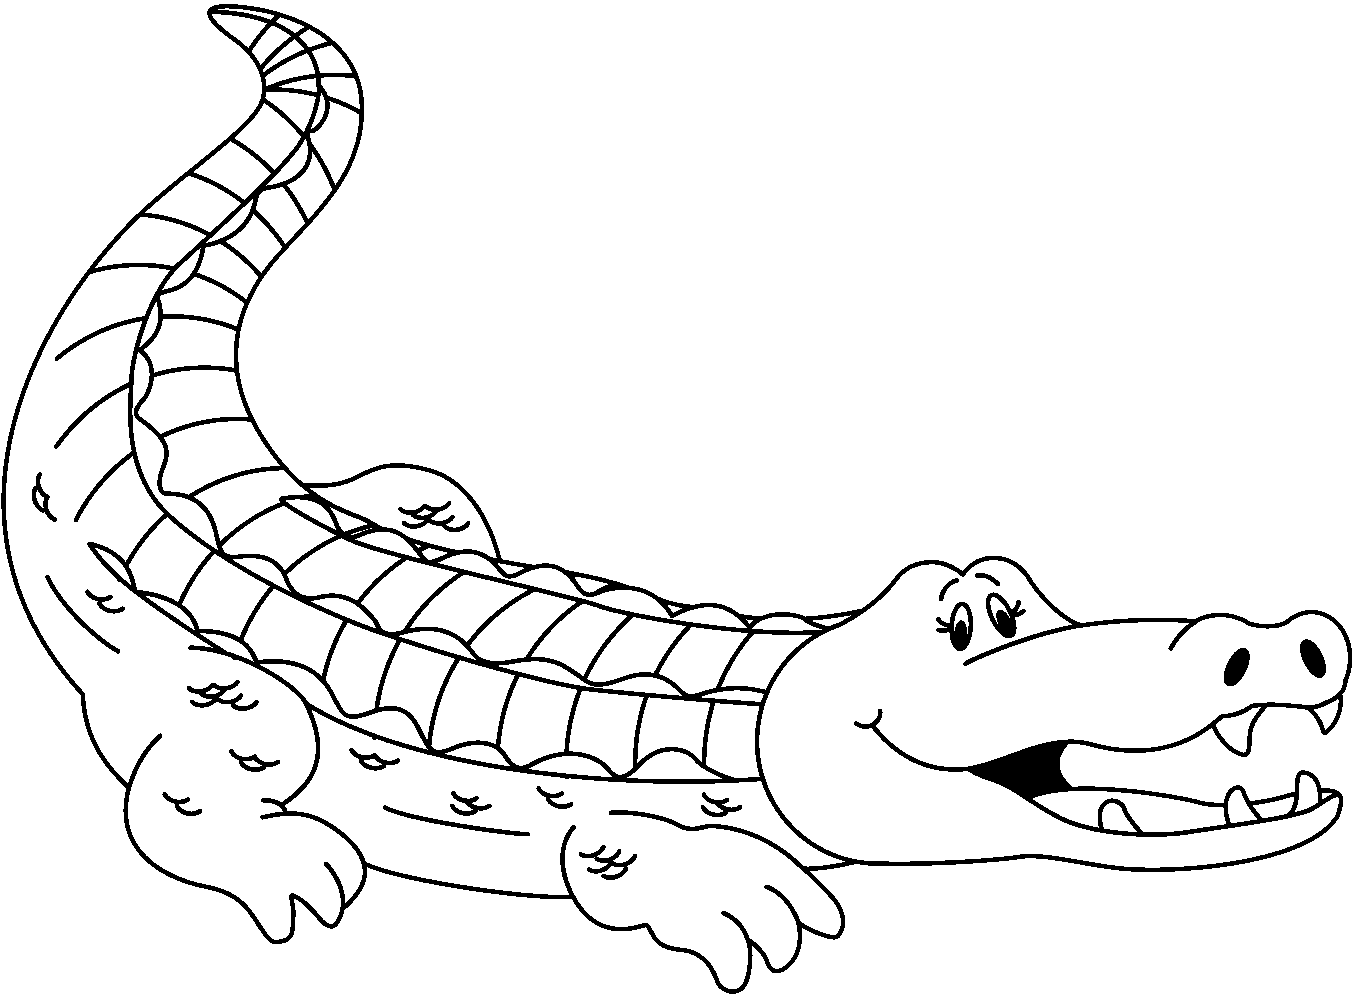 Crocodile alligator outline.